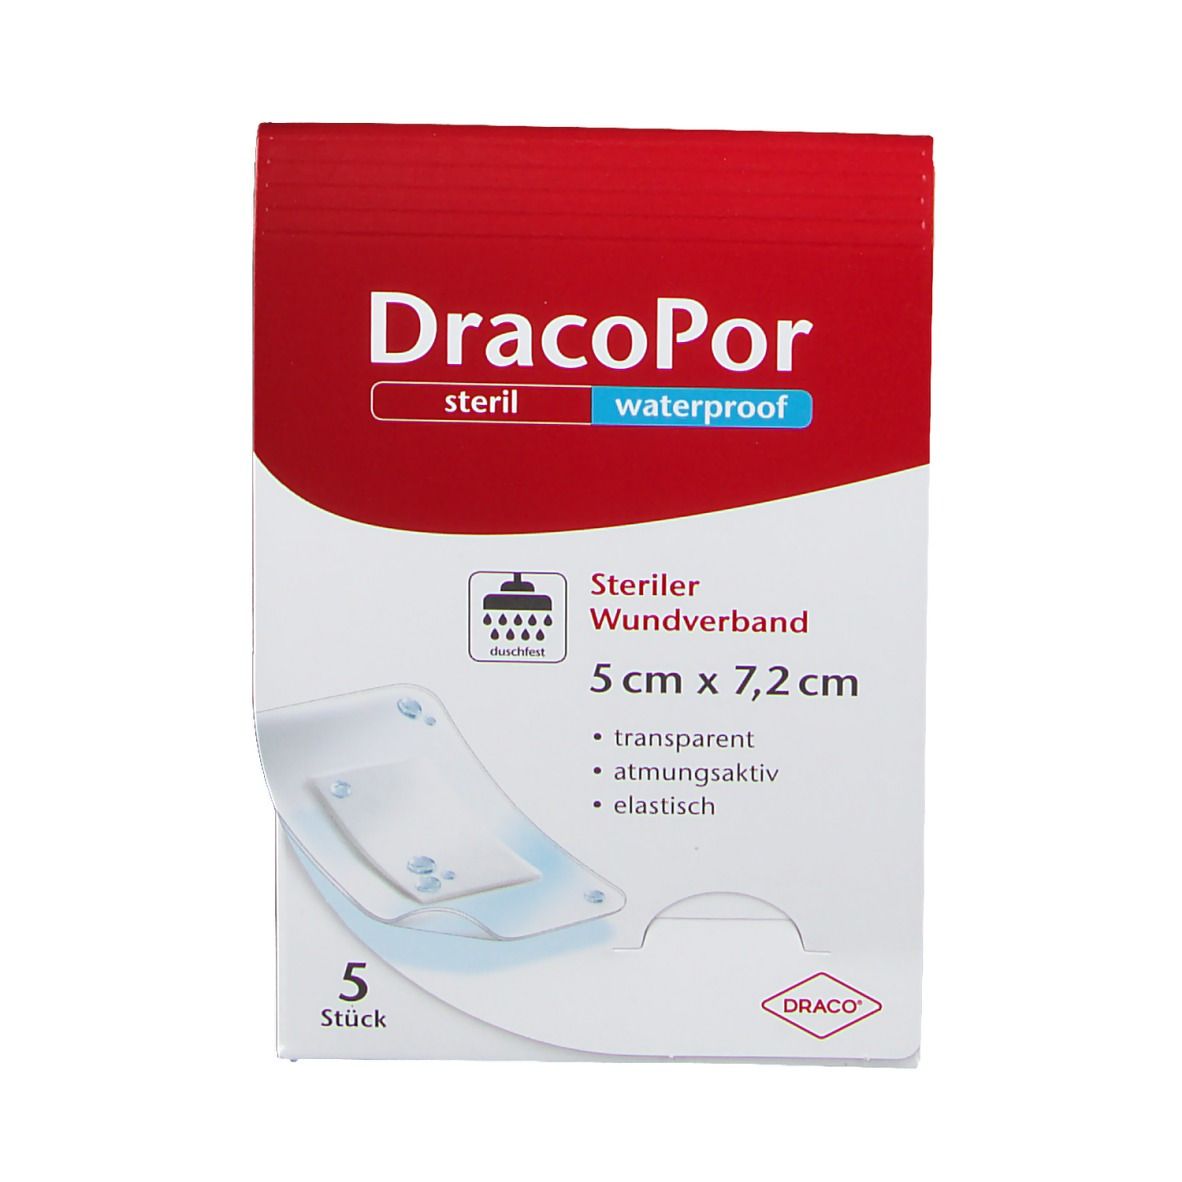 DracoPor Waterproof Wundverband steril 5 x 7,2 cm